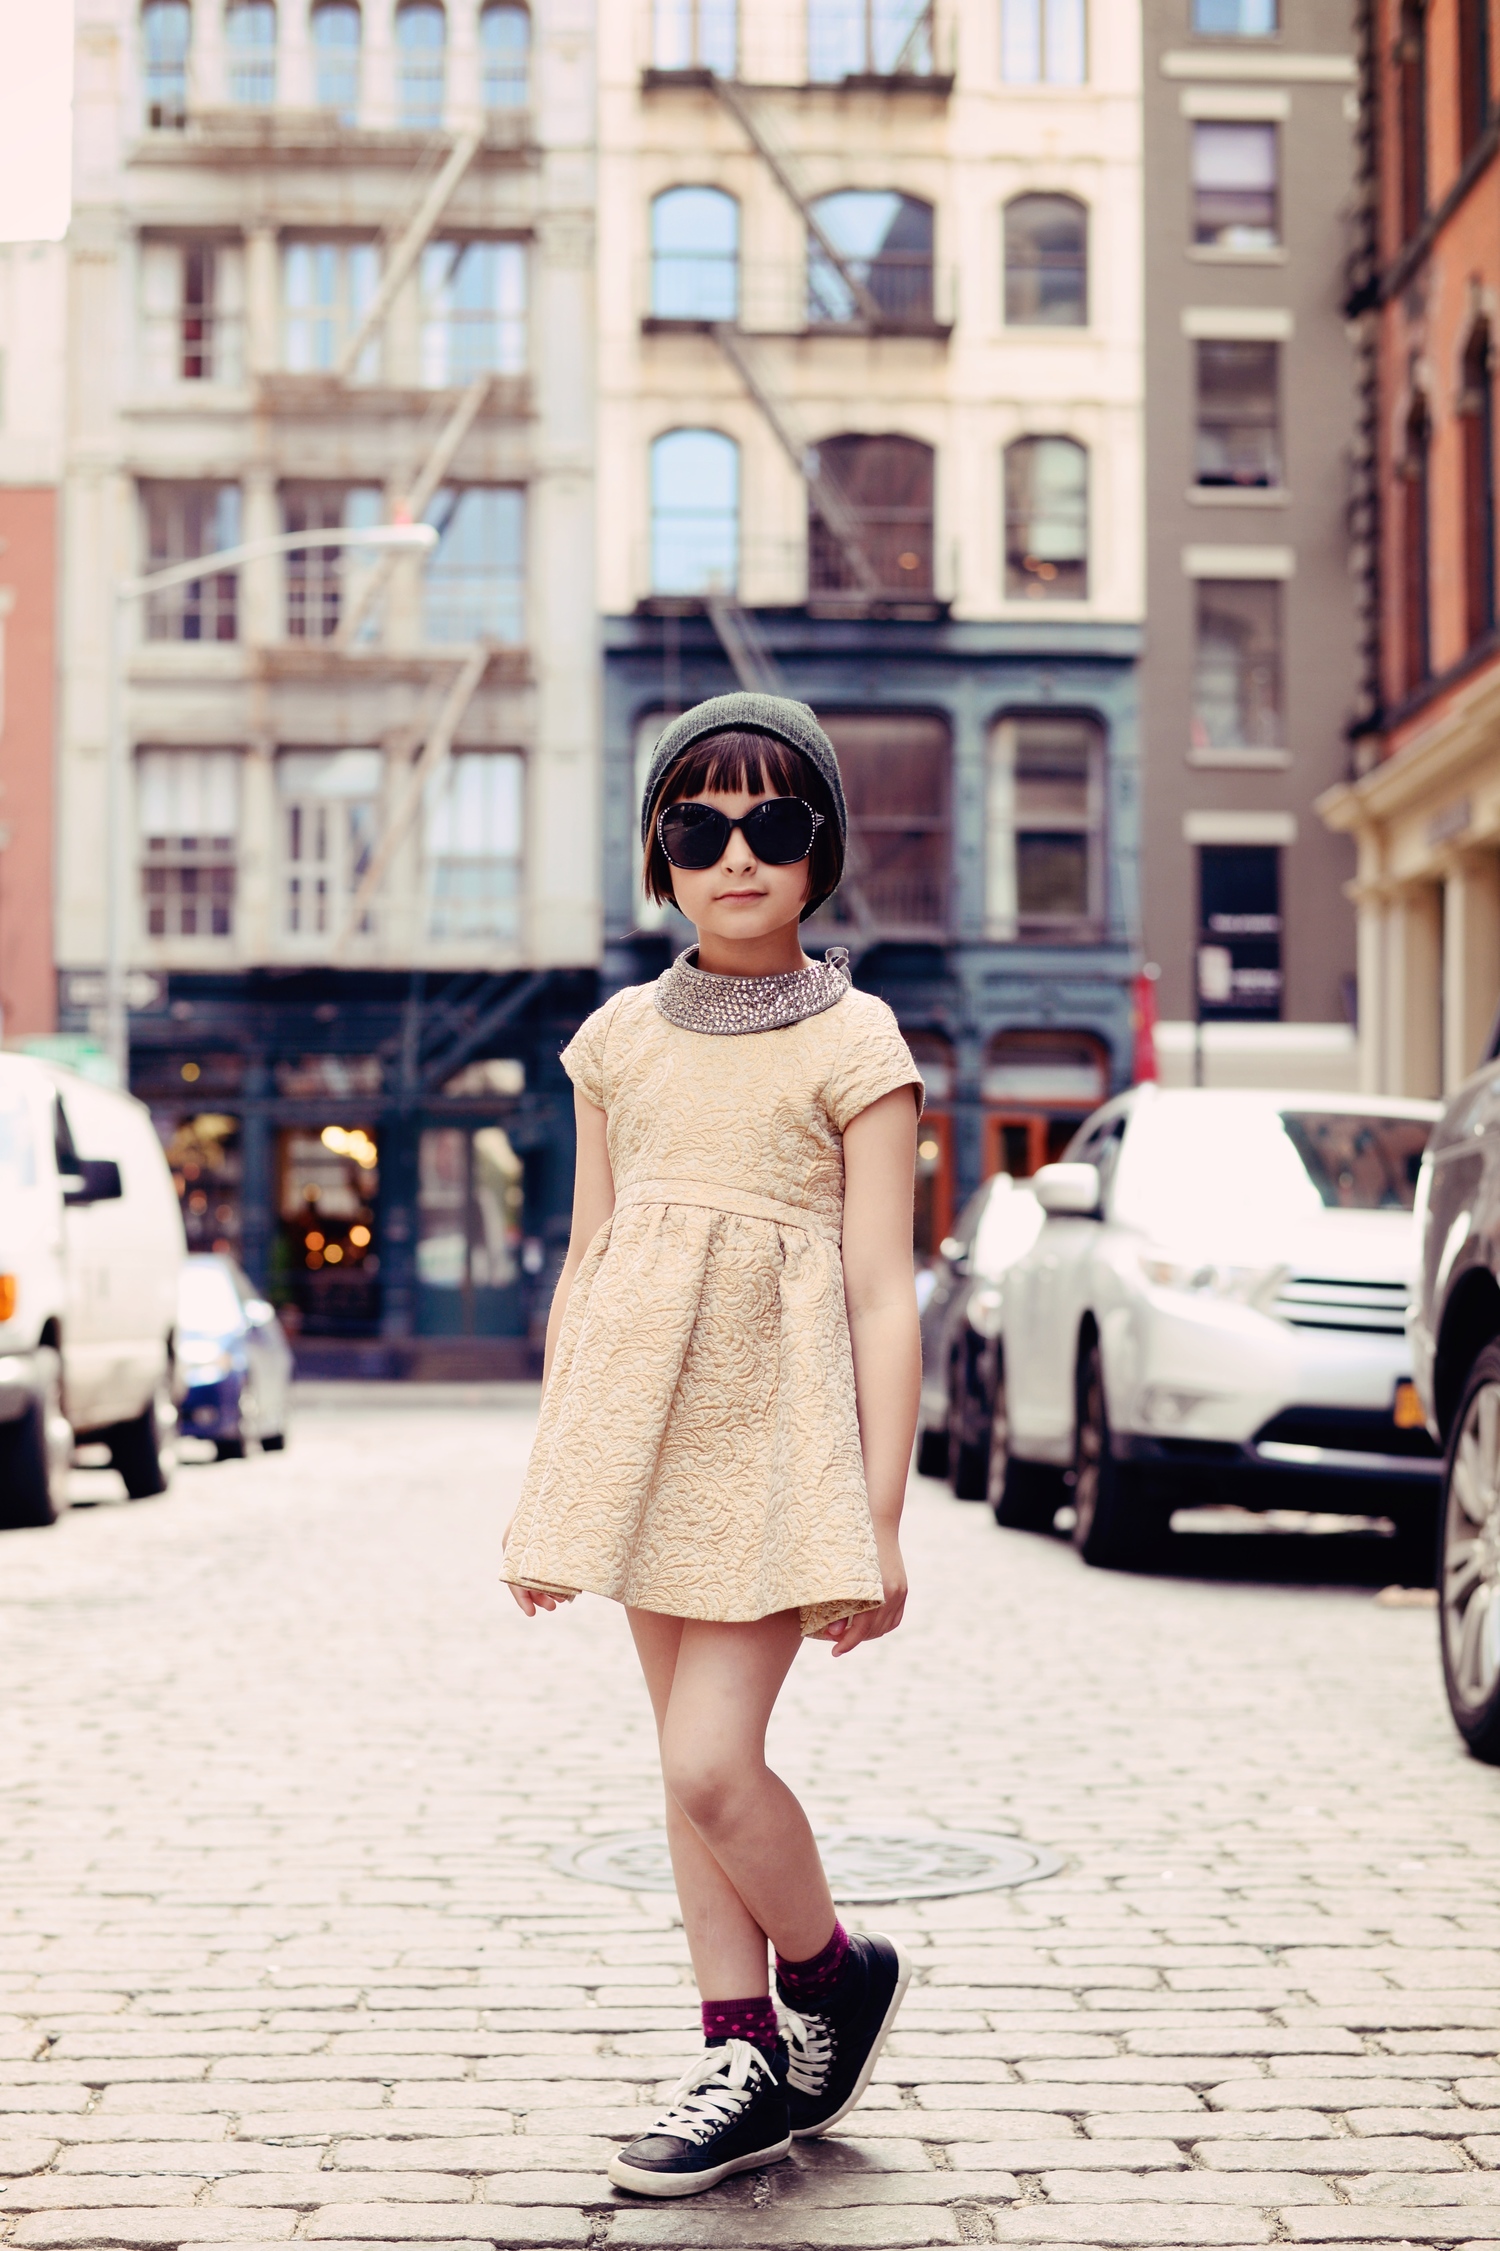 Enfant+Street+Style+by+Gina+Kim+Photography-73.jpeg